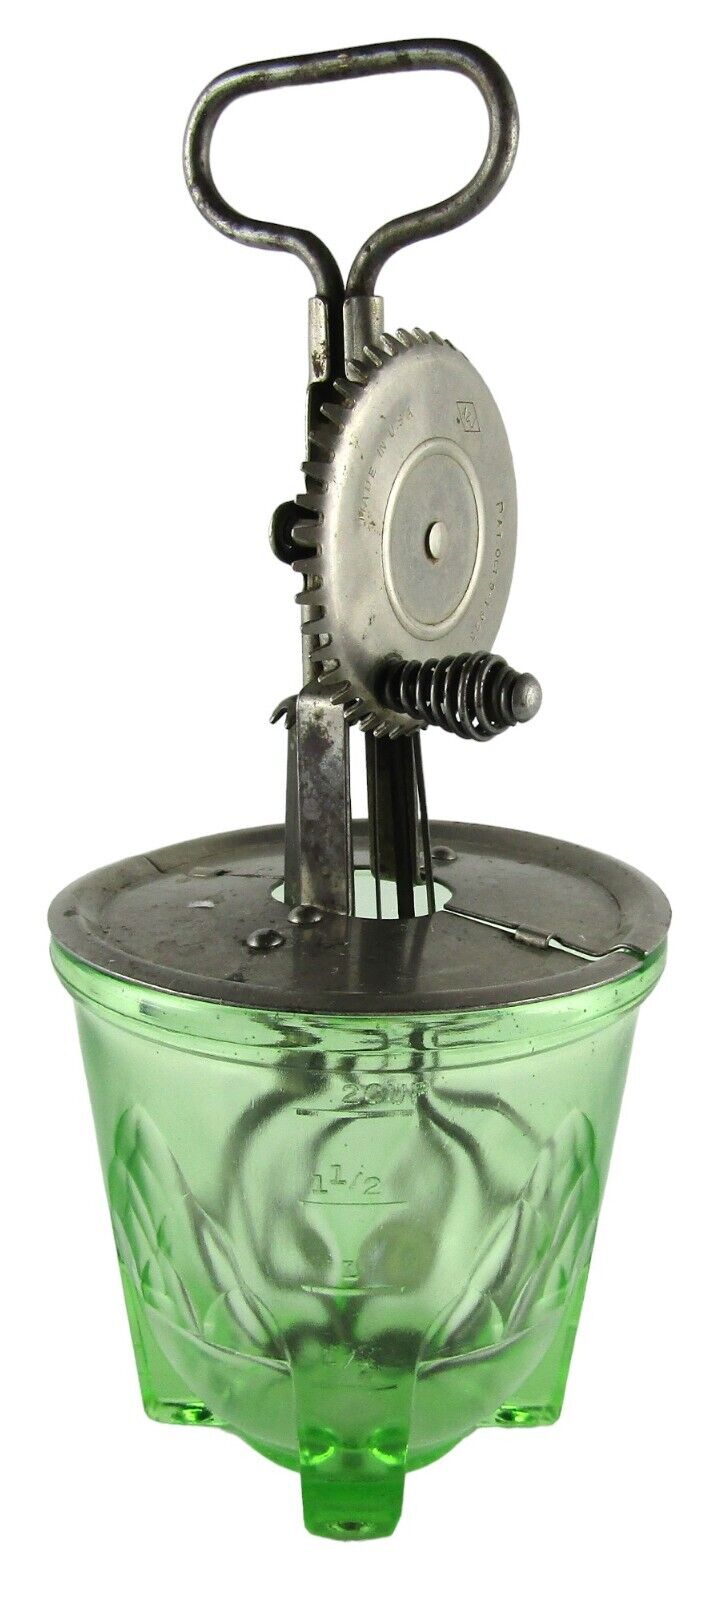 Antique A & J Hand Mixer/Egg Beater Green Uranium Depression Glass Measuring Cup